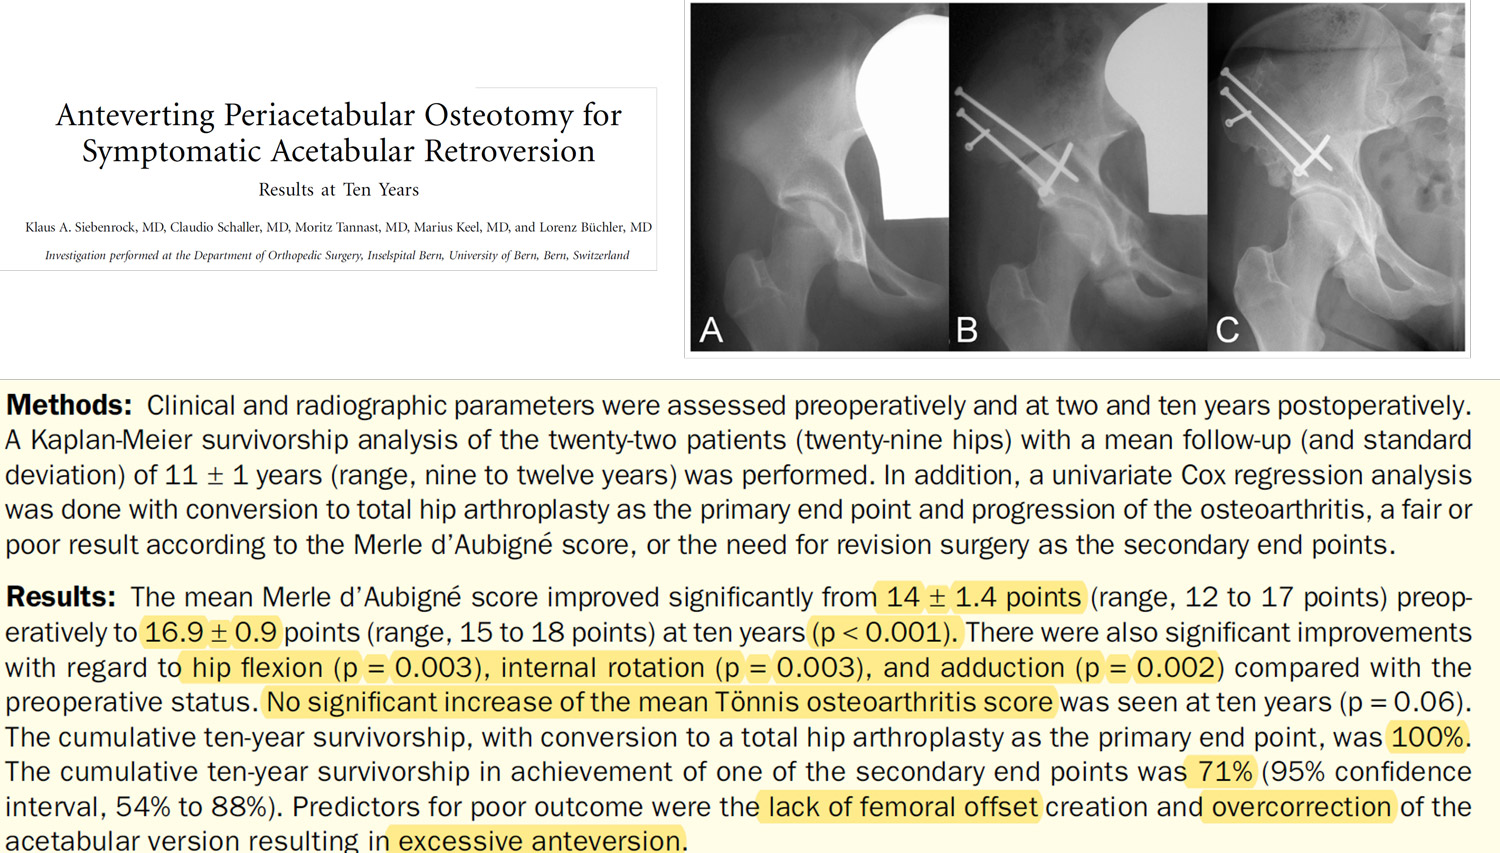 Anteverting Pariacetabular Osteotomy fo Symptomatic Acetabular Retroversion